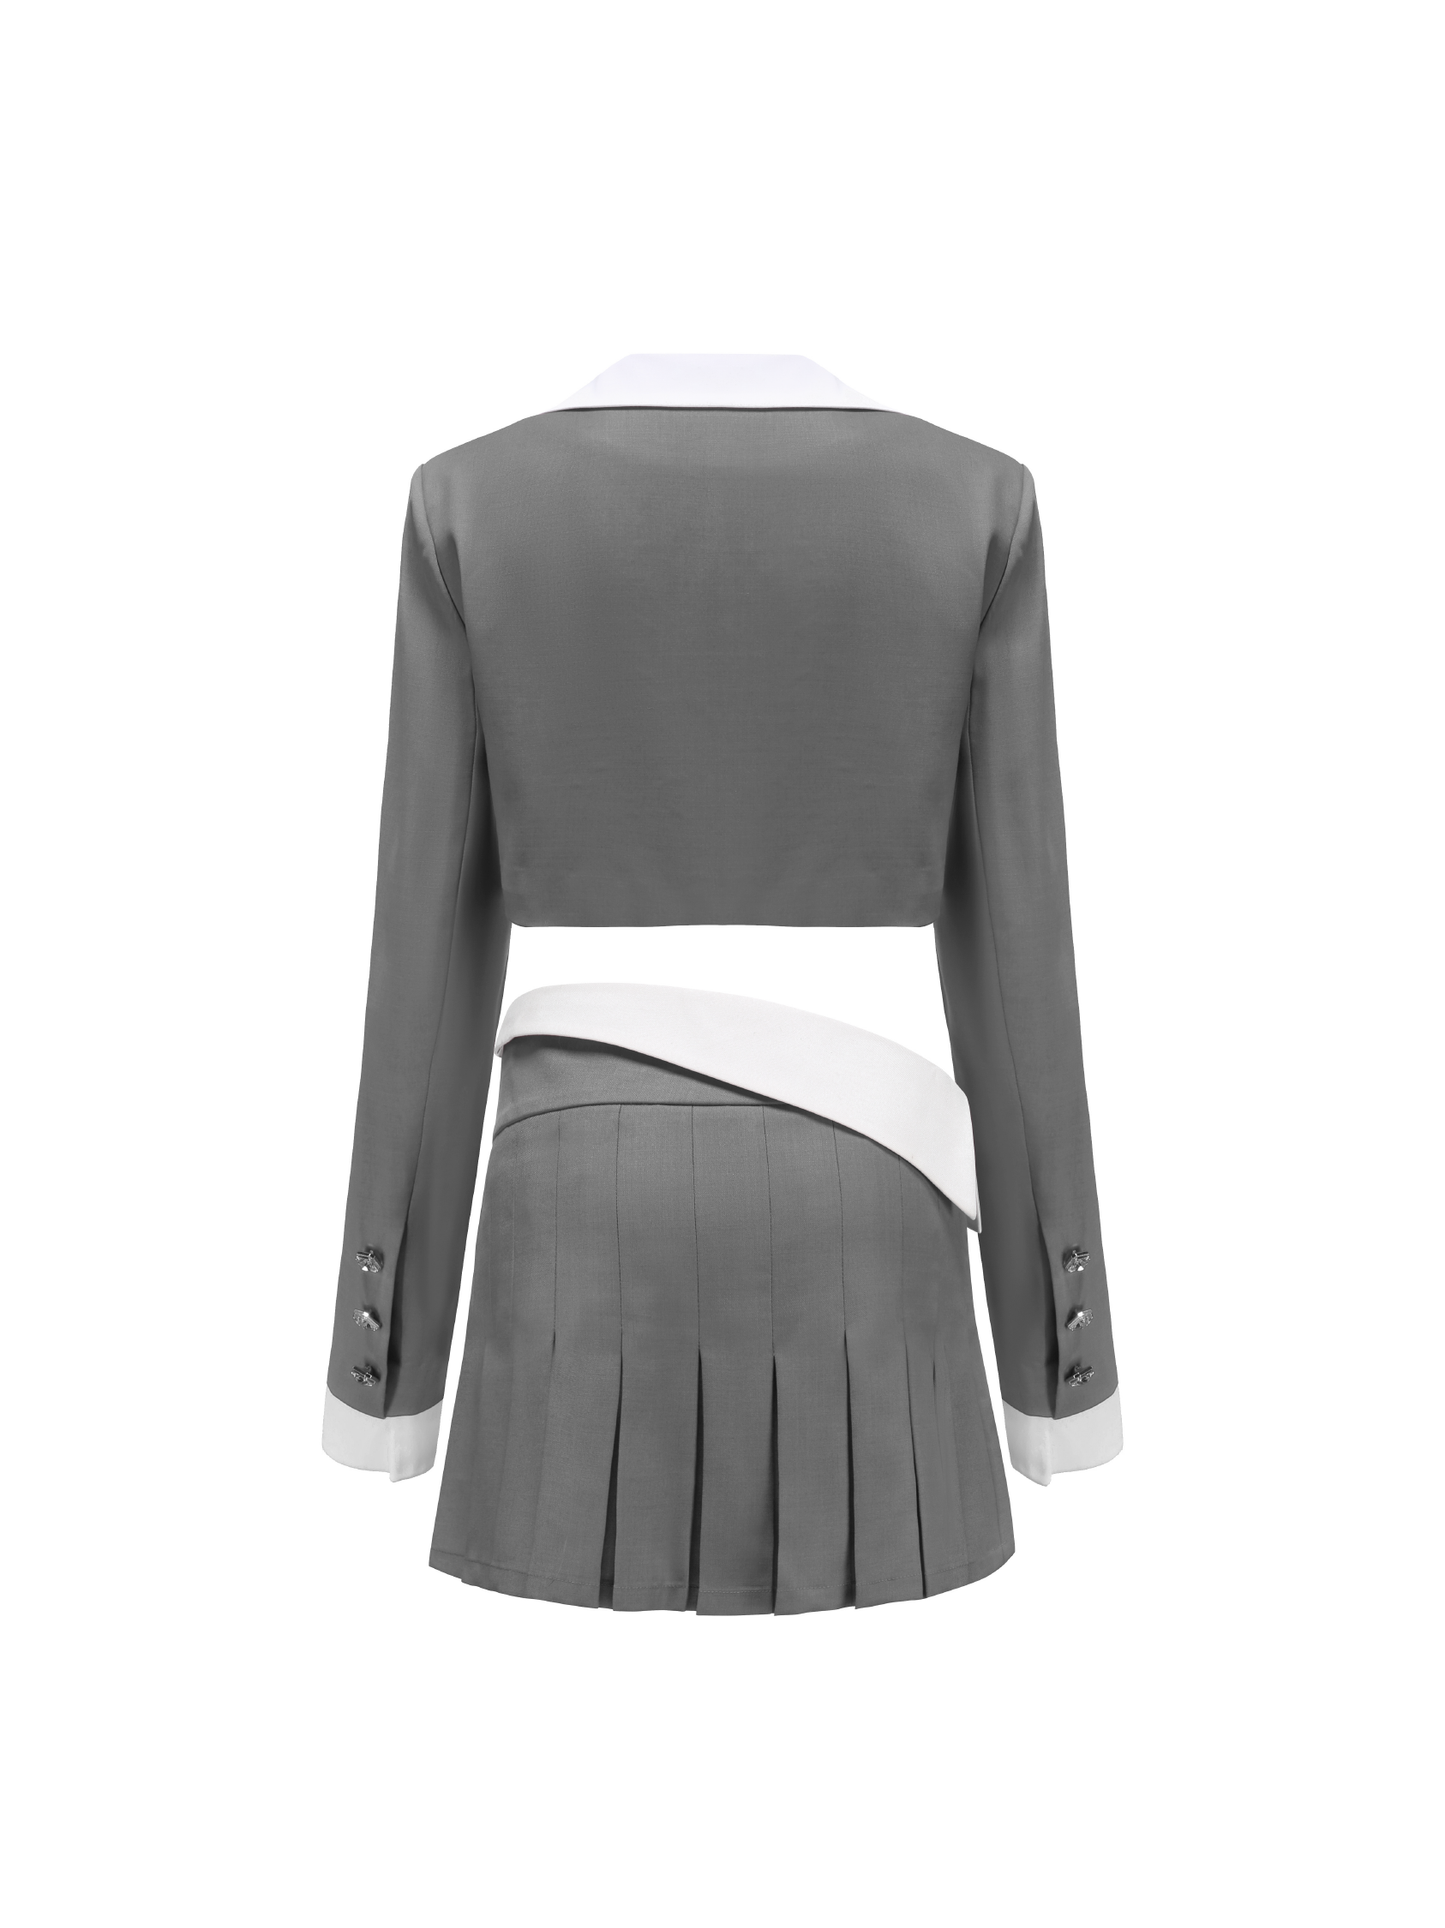 Harper Skirt + Charloteen Blazer Set (Grey)